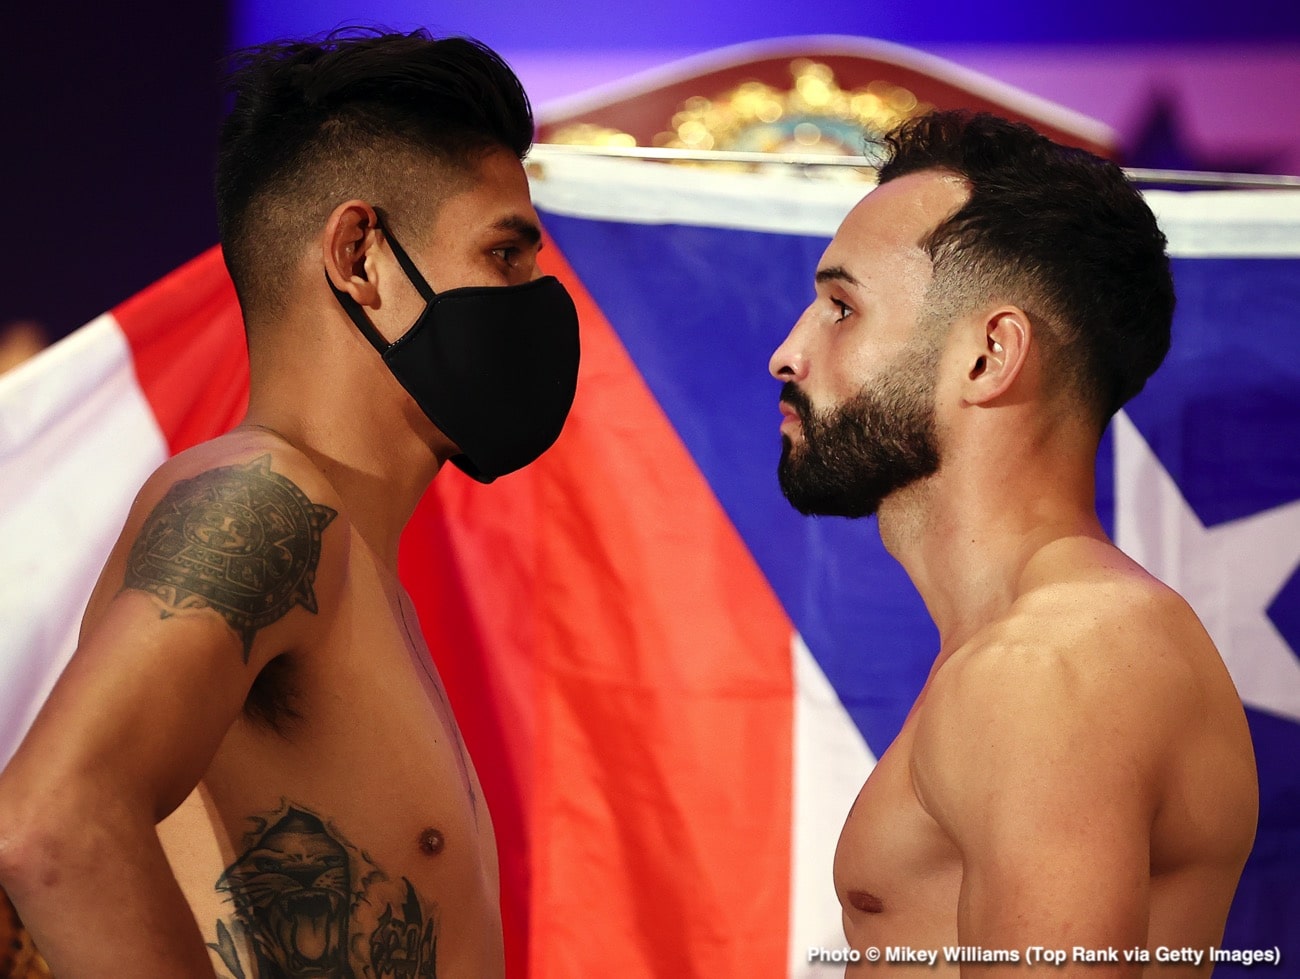 Christopher Diaz boxing image / photo